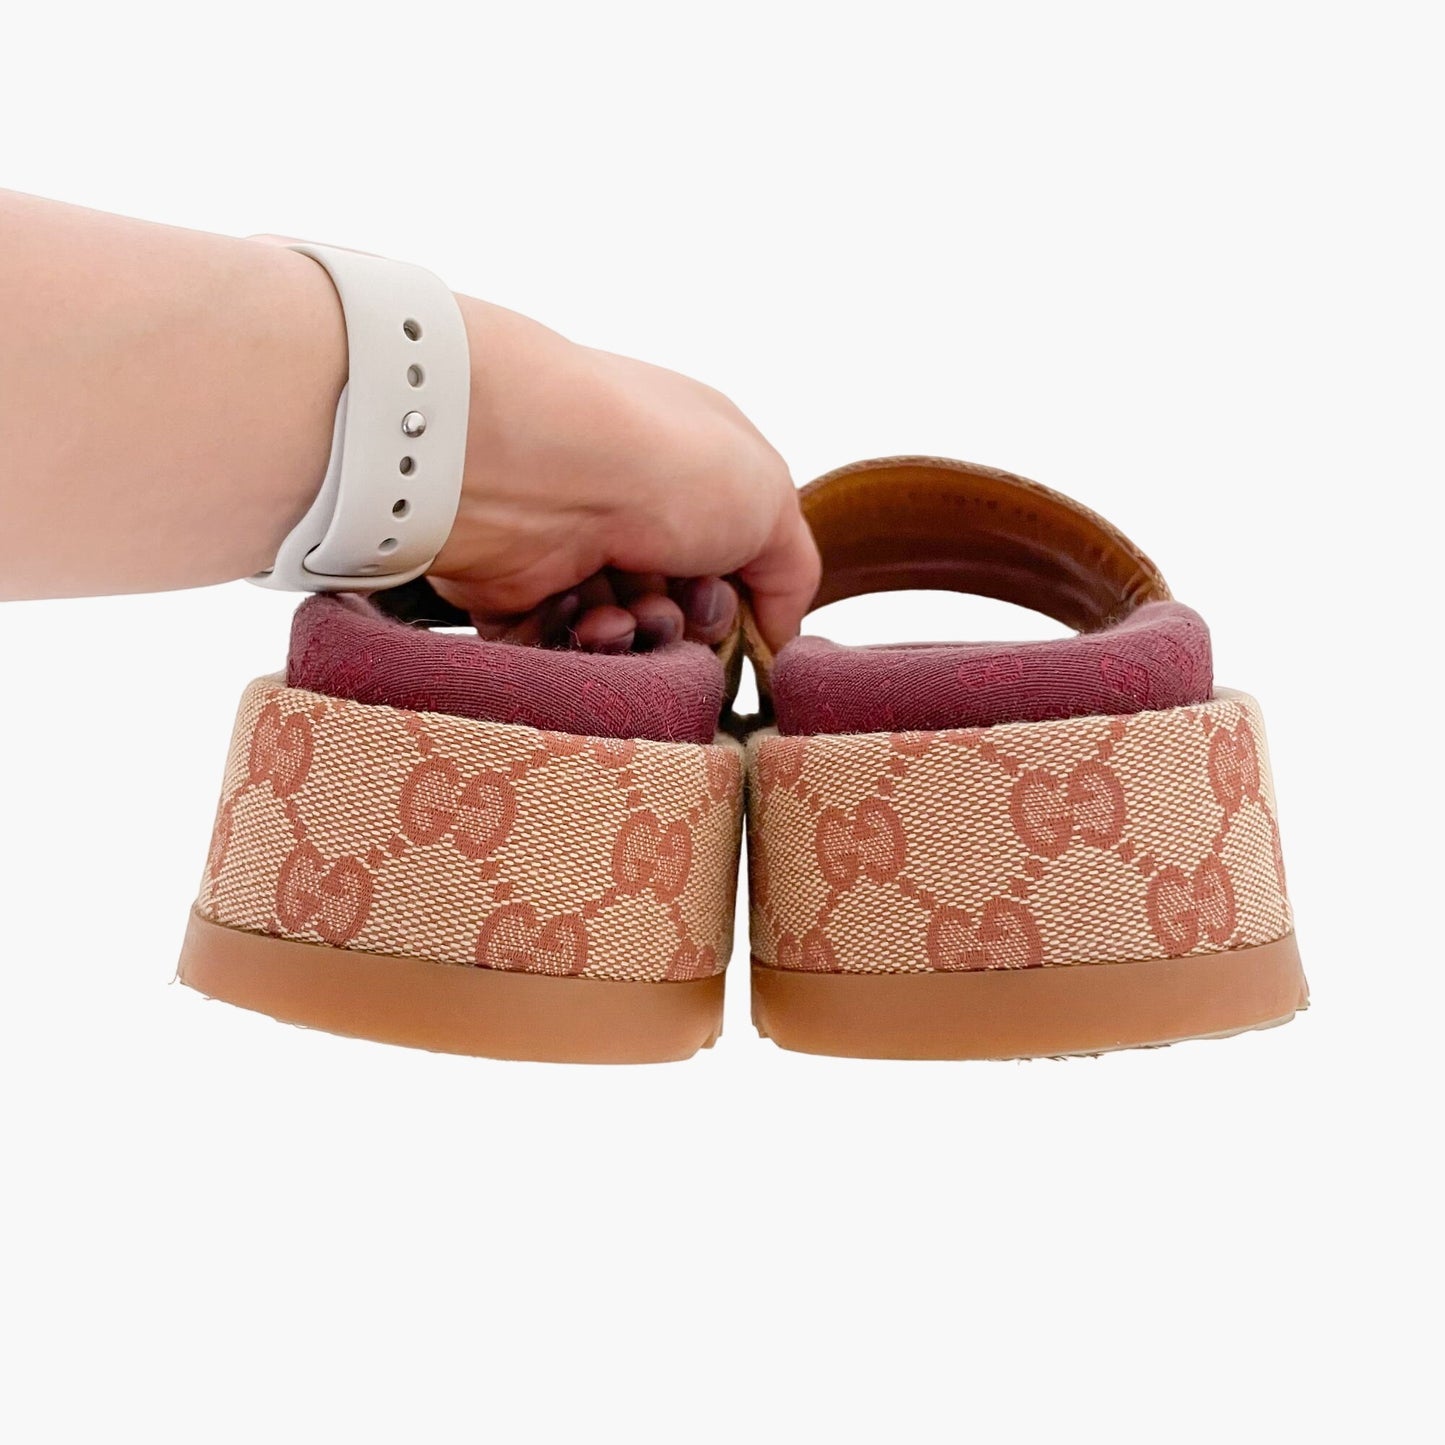 Gucci Angelina Platform Slide Sandals in Beige GG Canvas Size 38.5